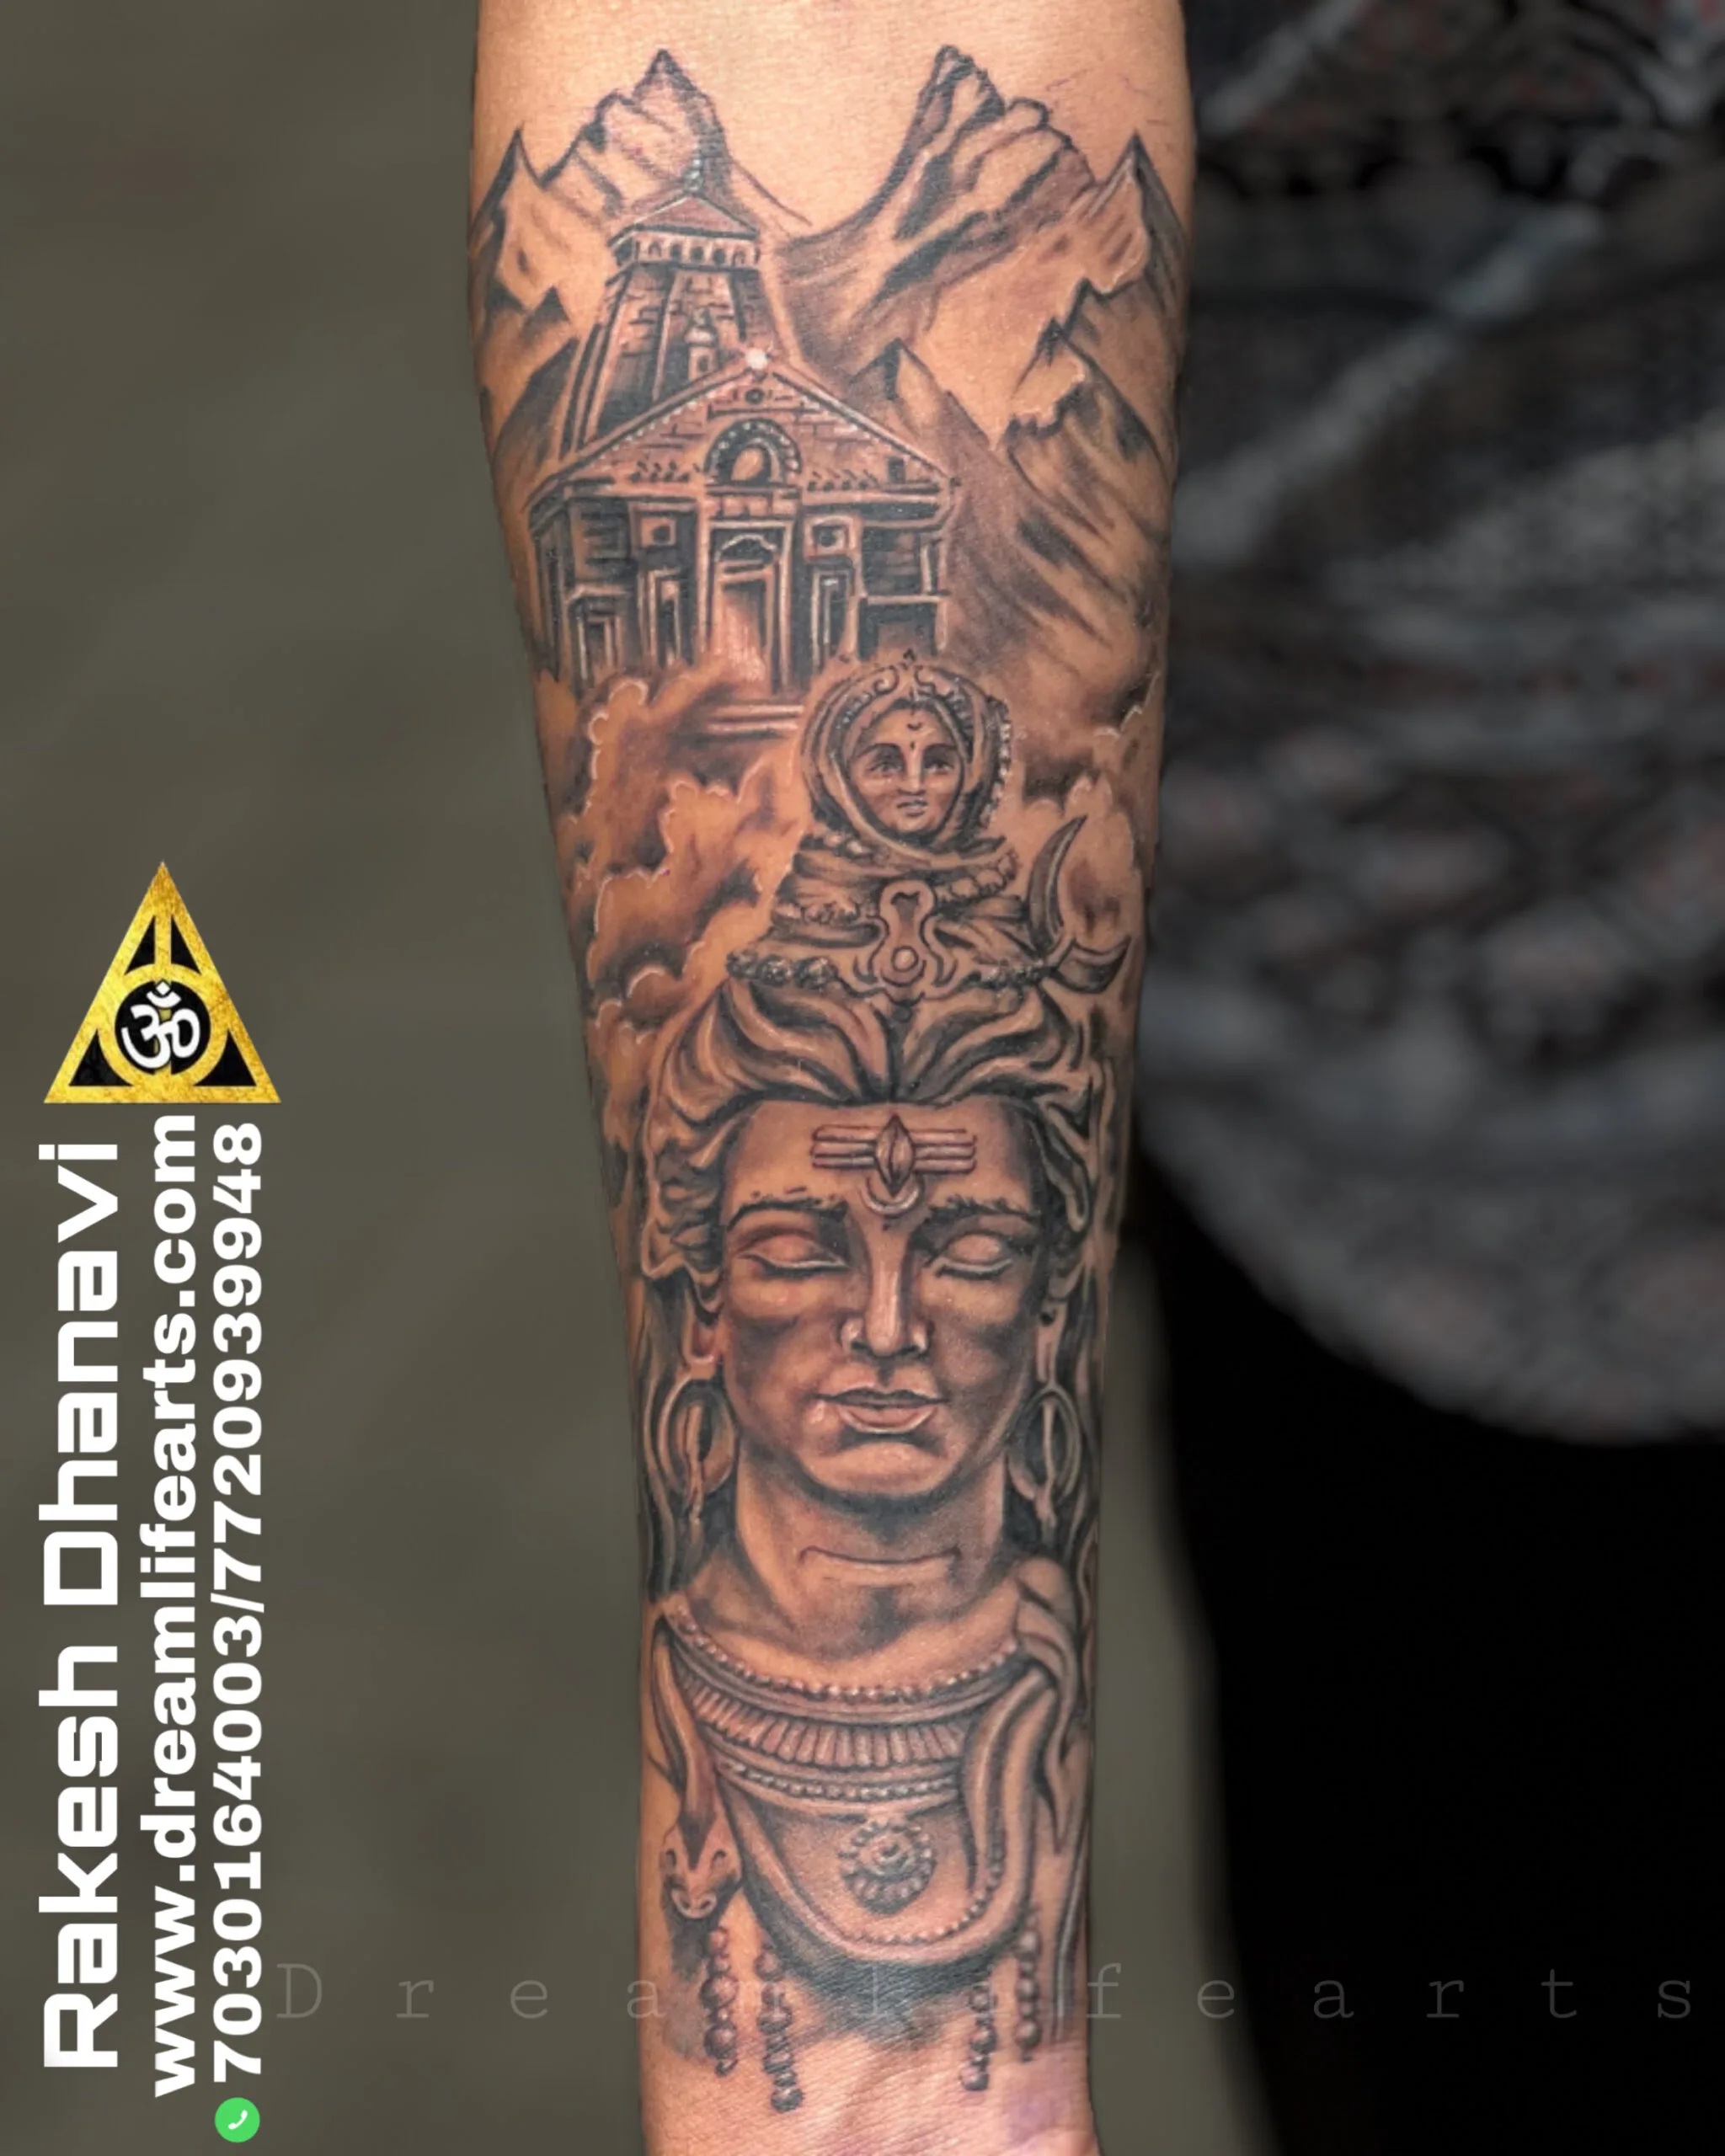 Mahadev tattoo |Mahadev tattoo design |Shiva tattoo |Shivji tattoo |Bholenath  tattoo | Wrist tattoos for guys, Hand tattoos for guys, Forearm band tattoos